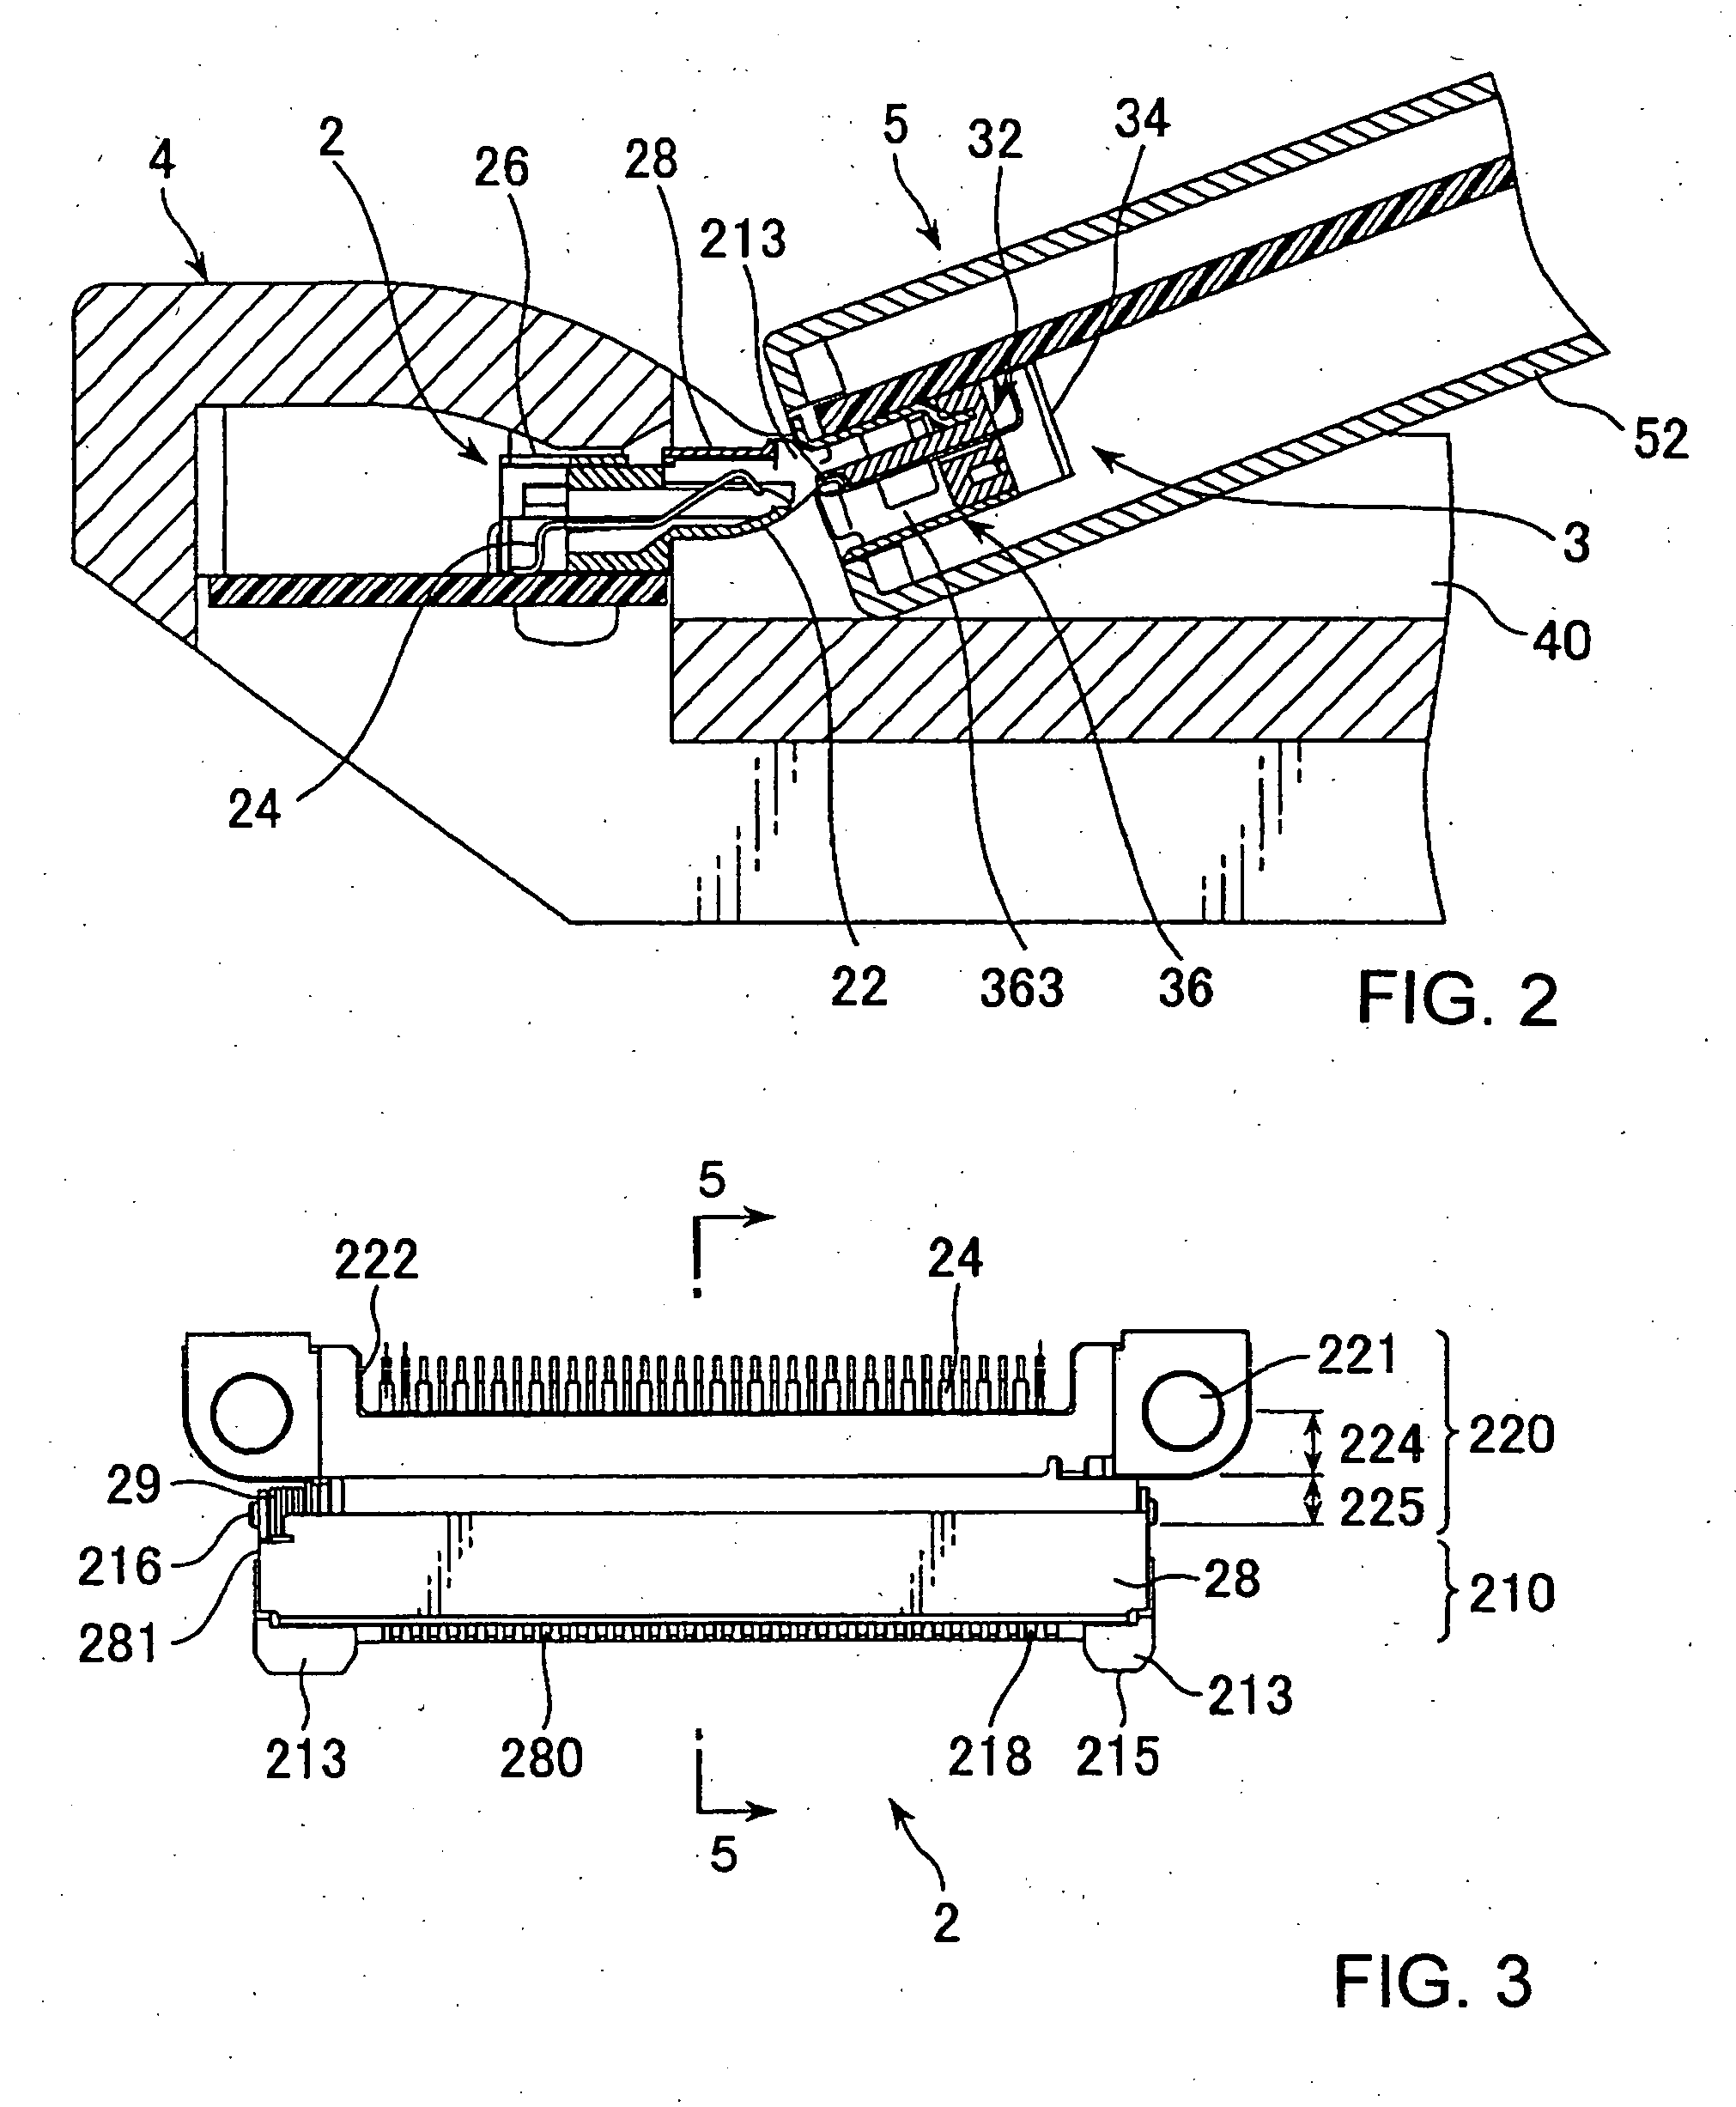 Electrical connector apparatus